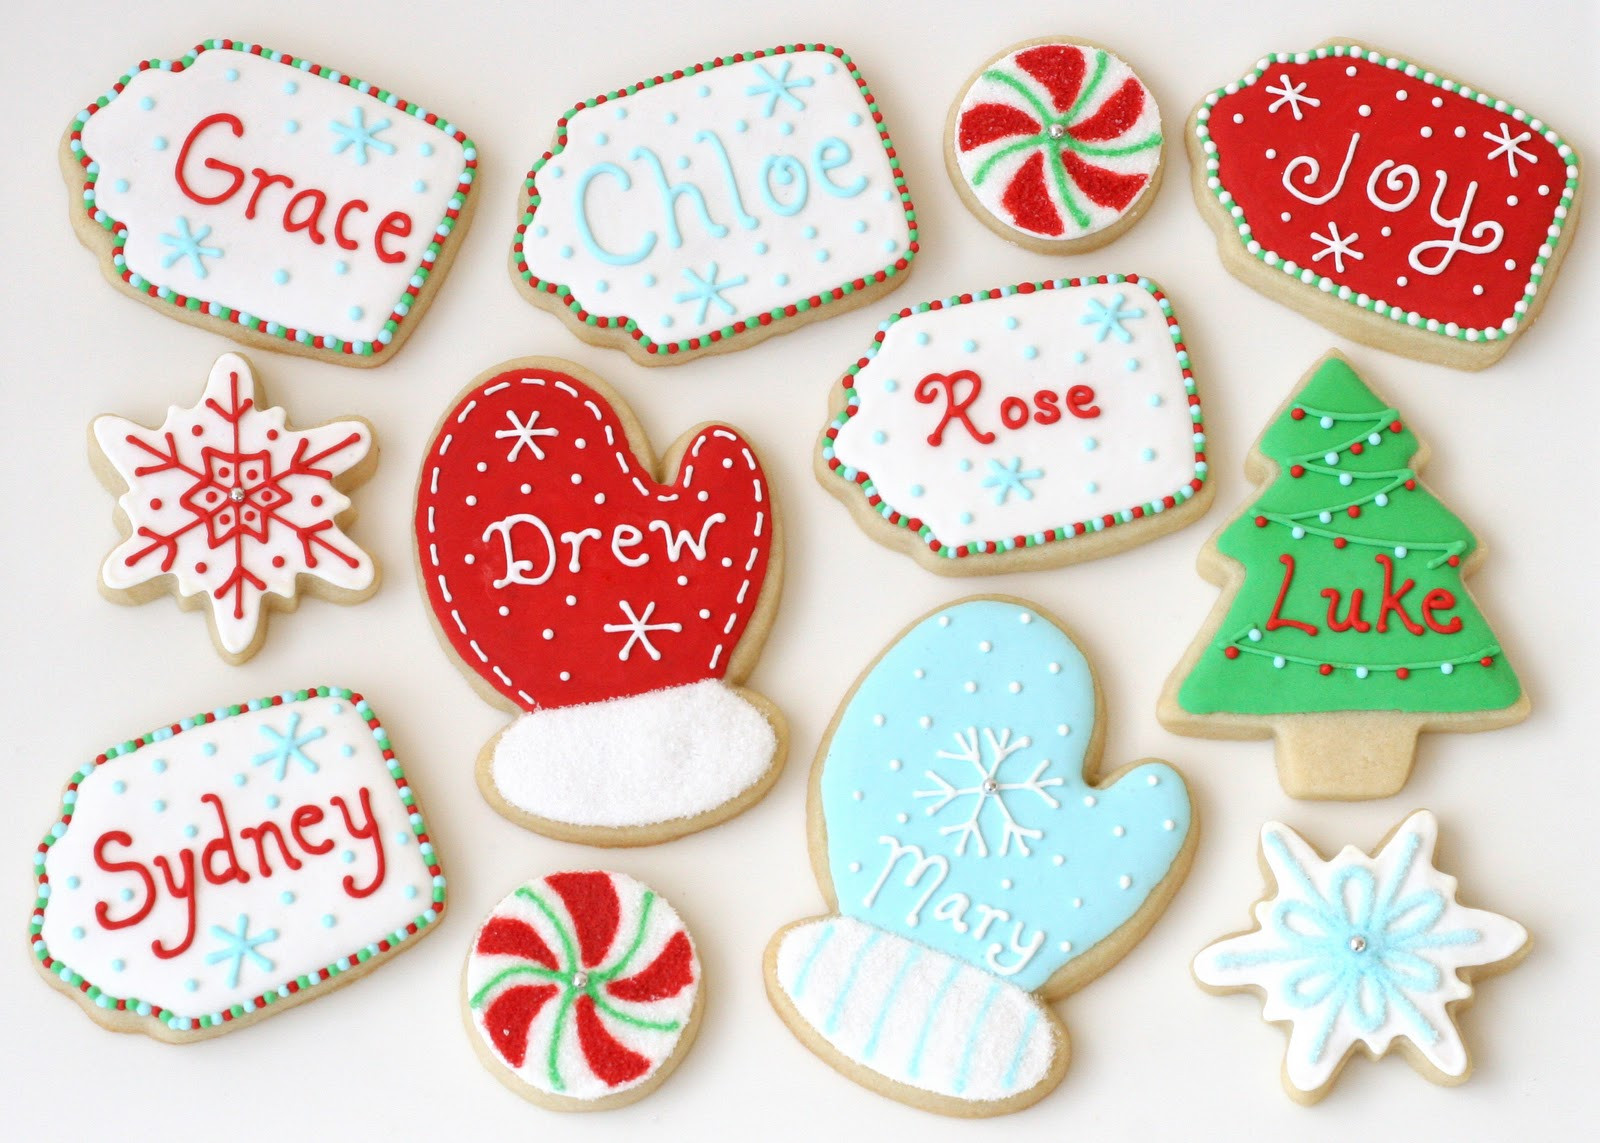 Christmas Sugar Cookies Decorating Ideas
 Christmas Cookies Galore Glorious Treats